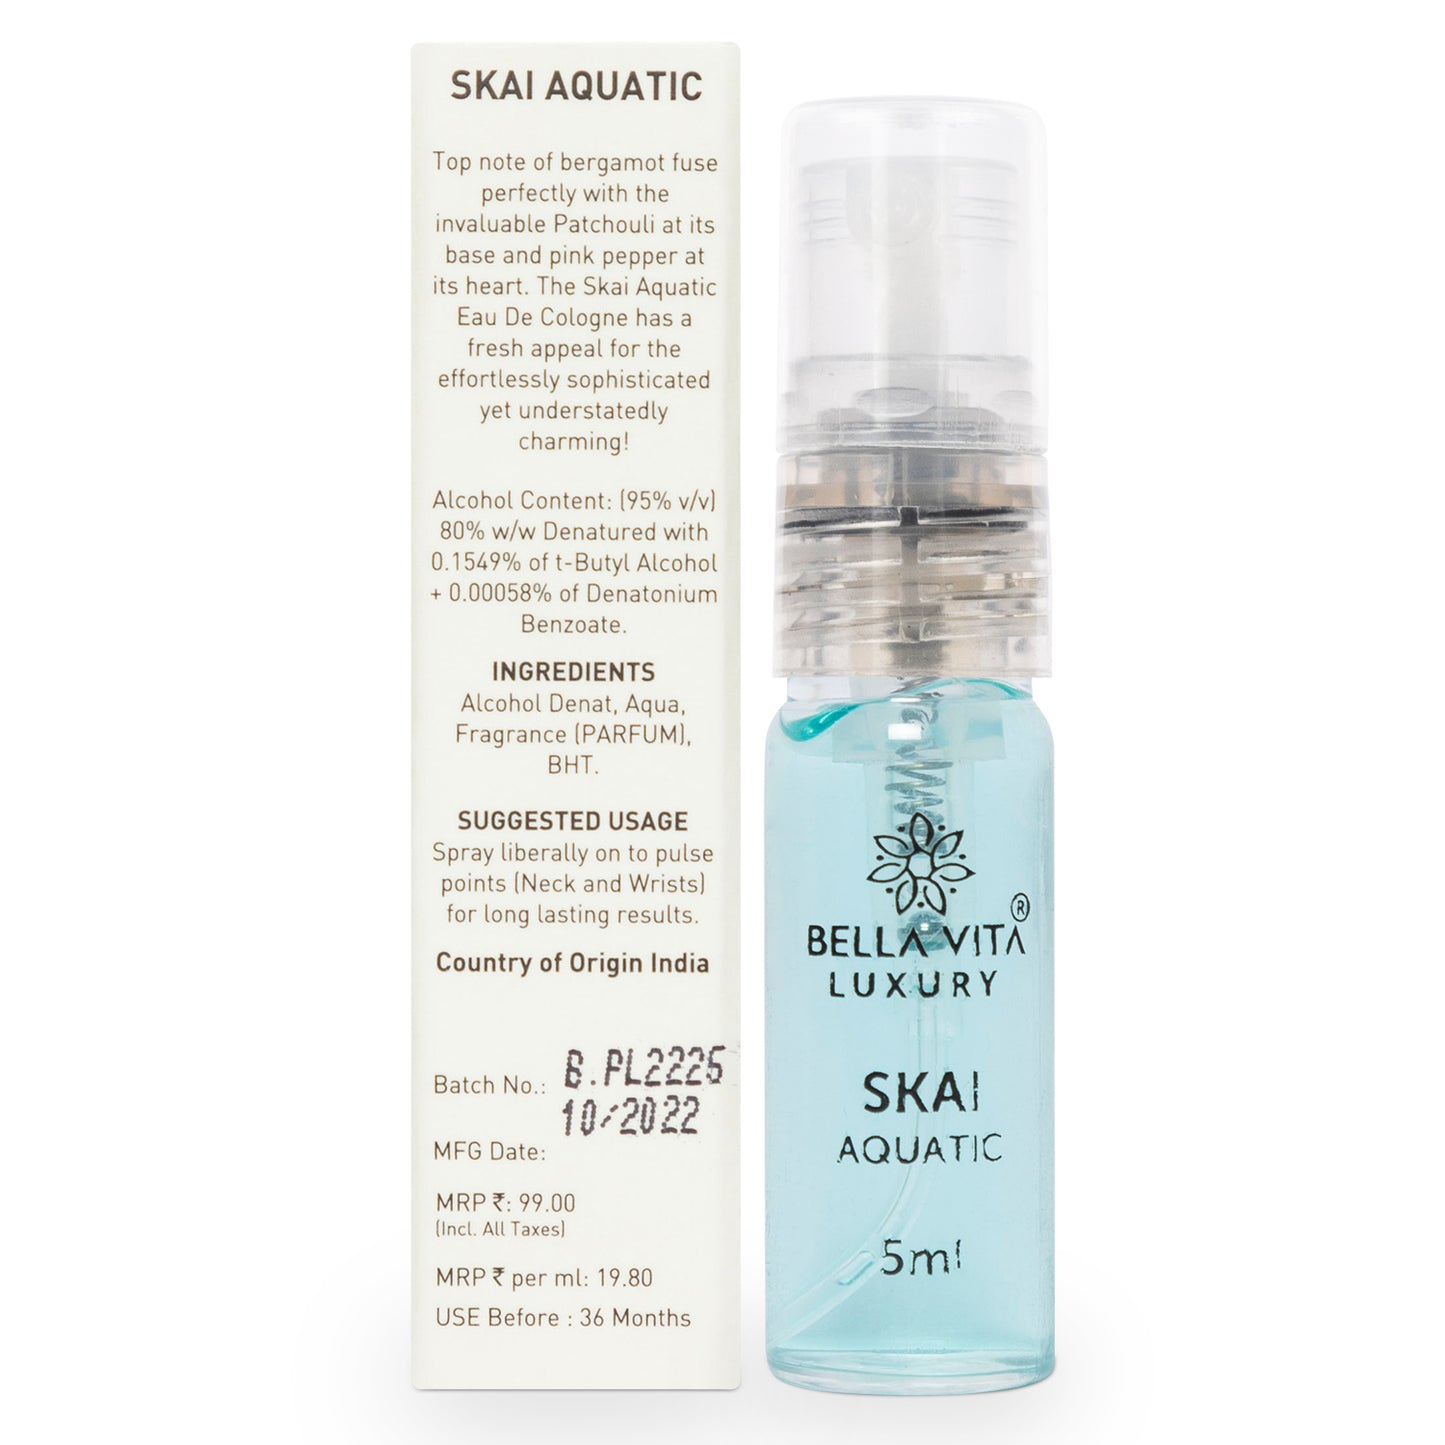 Bella Vita Luxury Skai Aquatic Unisex Perfume - 5ml/Unisex